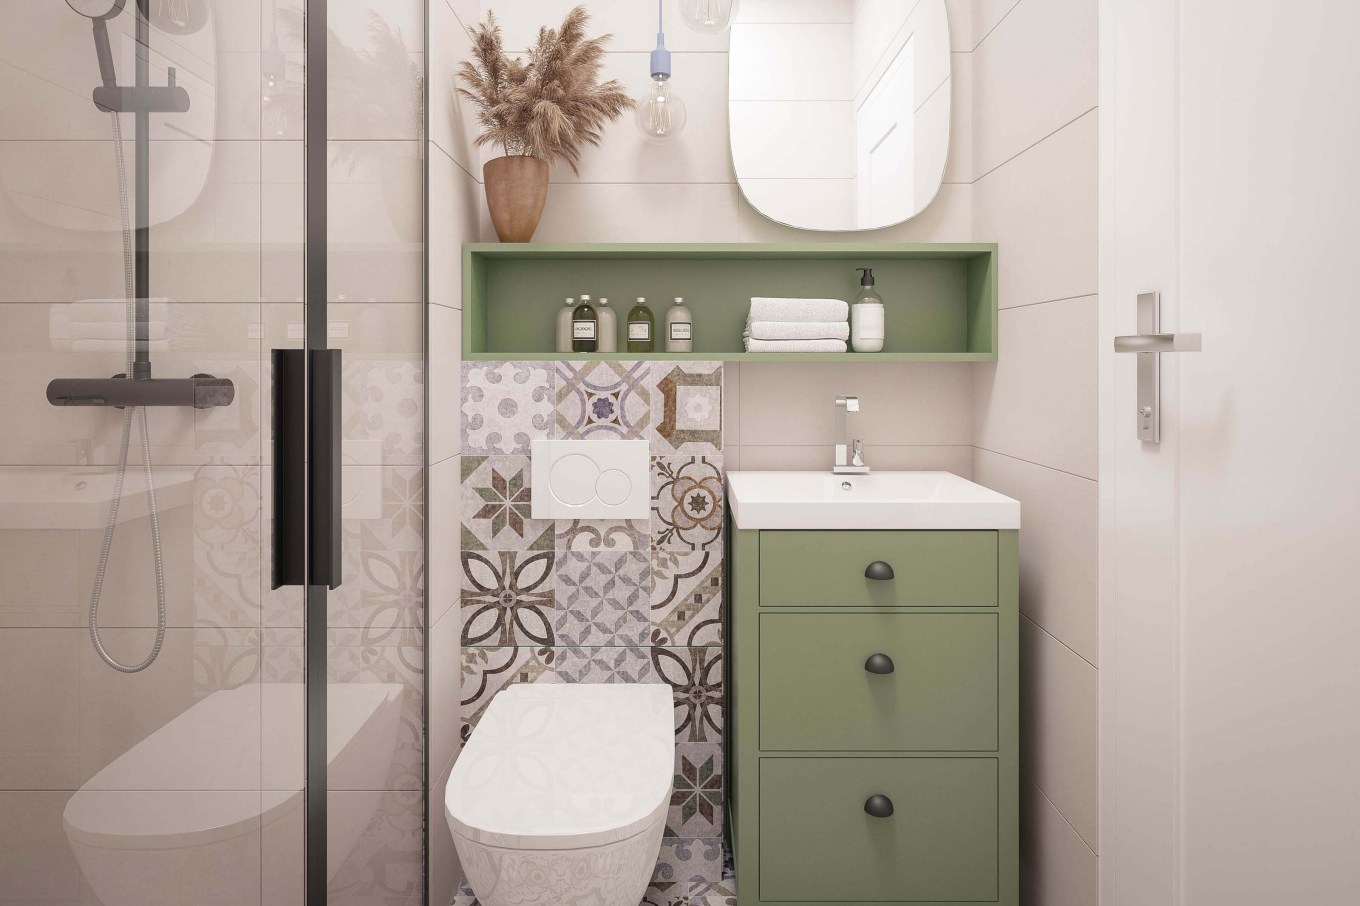 https://www.houselogic.com/wp-content/uploads/2022/04/small-bathroom-storage-ideas-green-shelf-vanity.jpg?w=1360